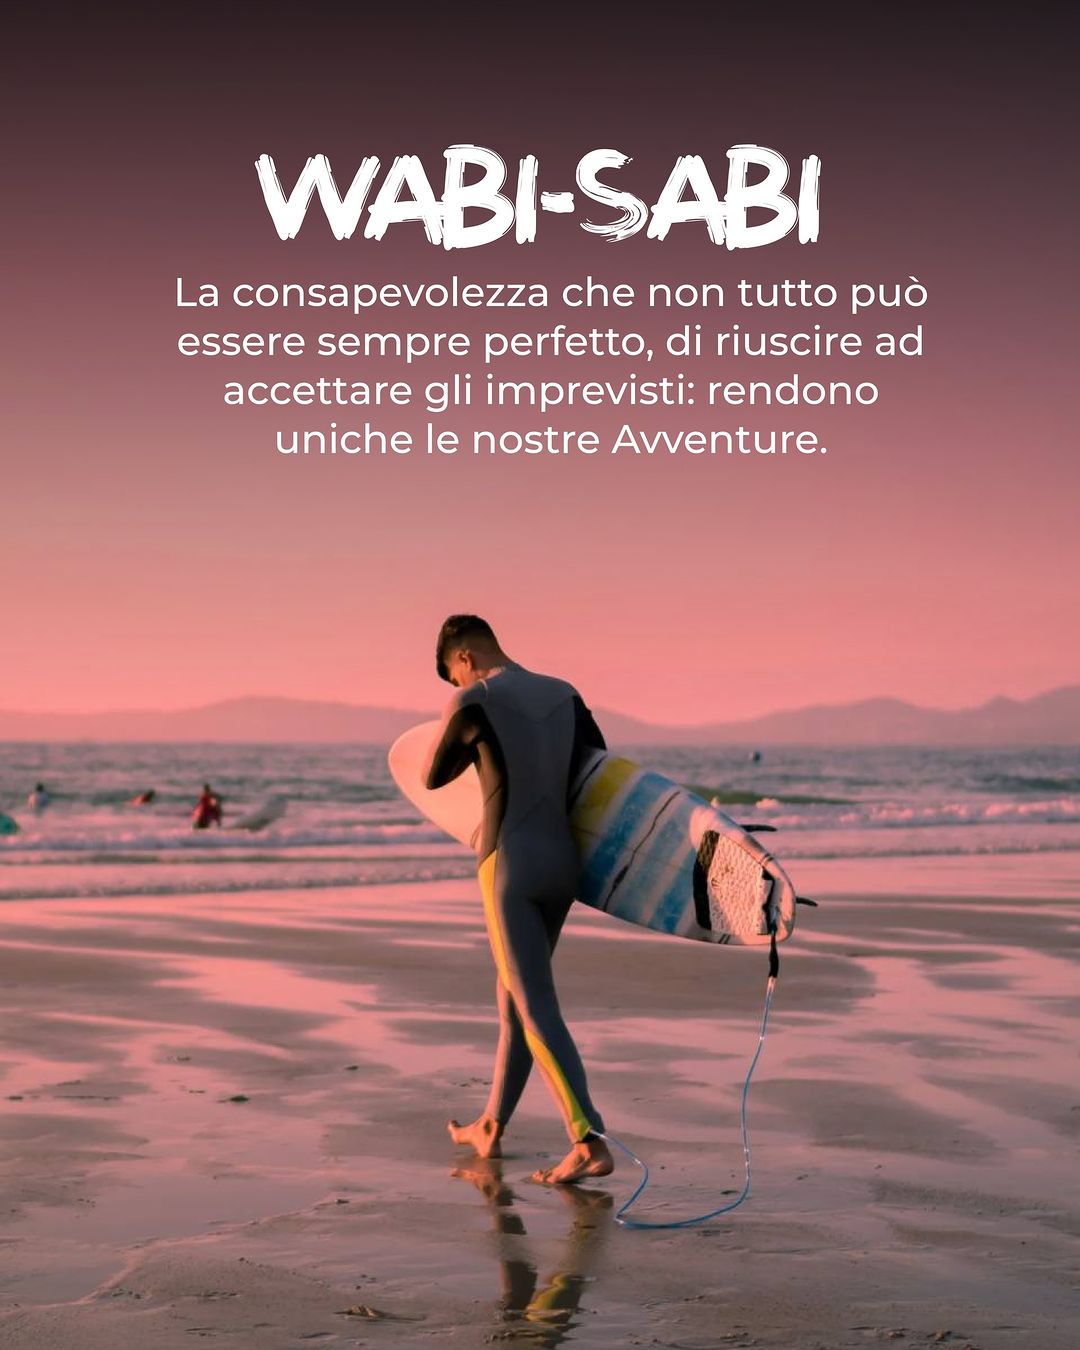 wabi-sabi